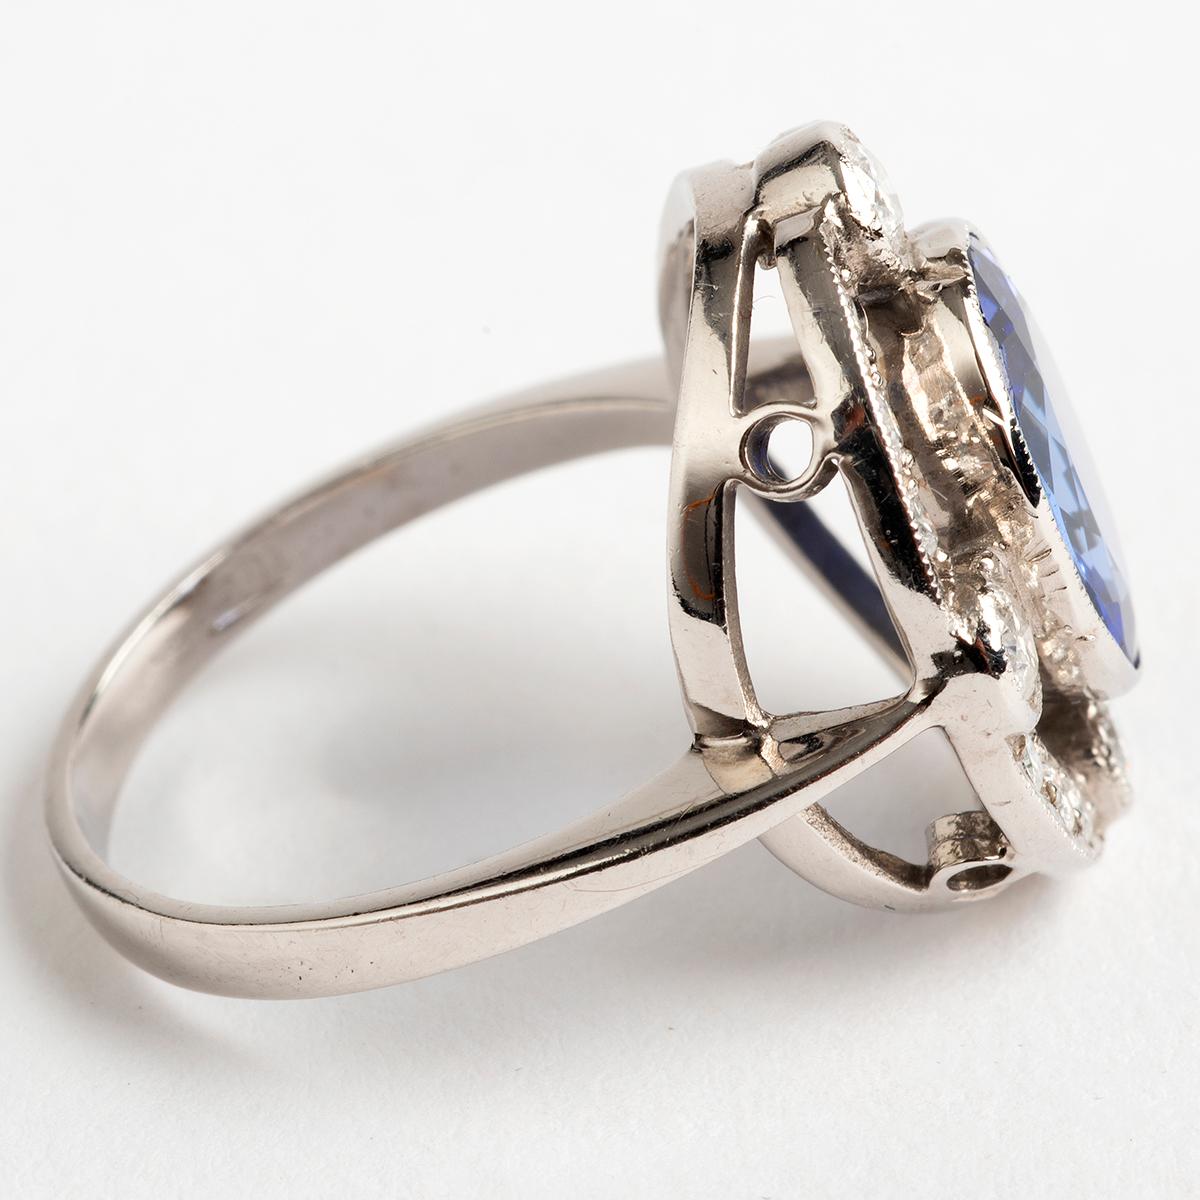 Oval Cut Tanzanite 'Est8.5 Carat' & Diamond Cluster Ring 'Est1.00 Carat', 18K White Gold